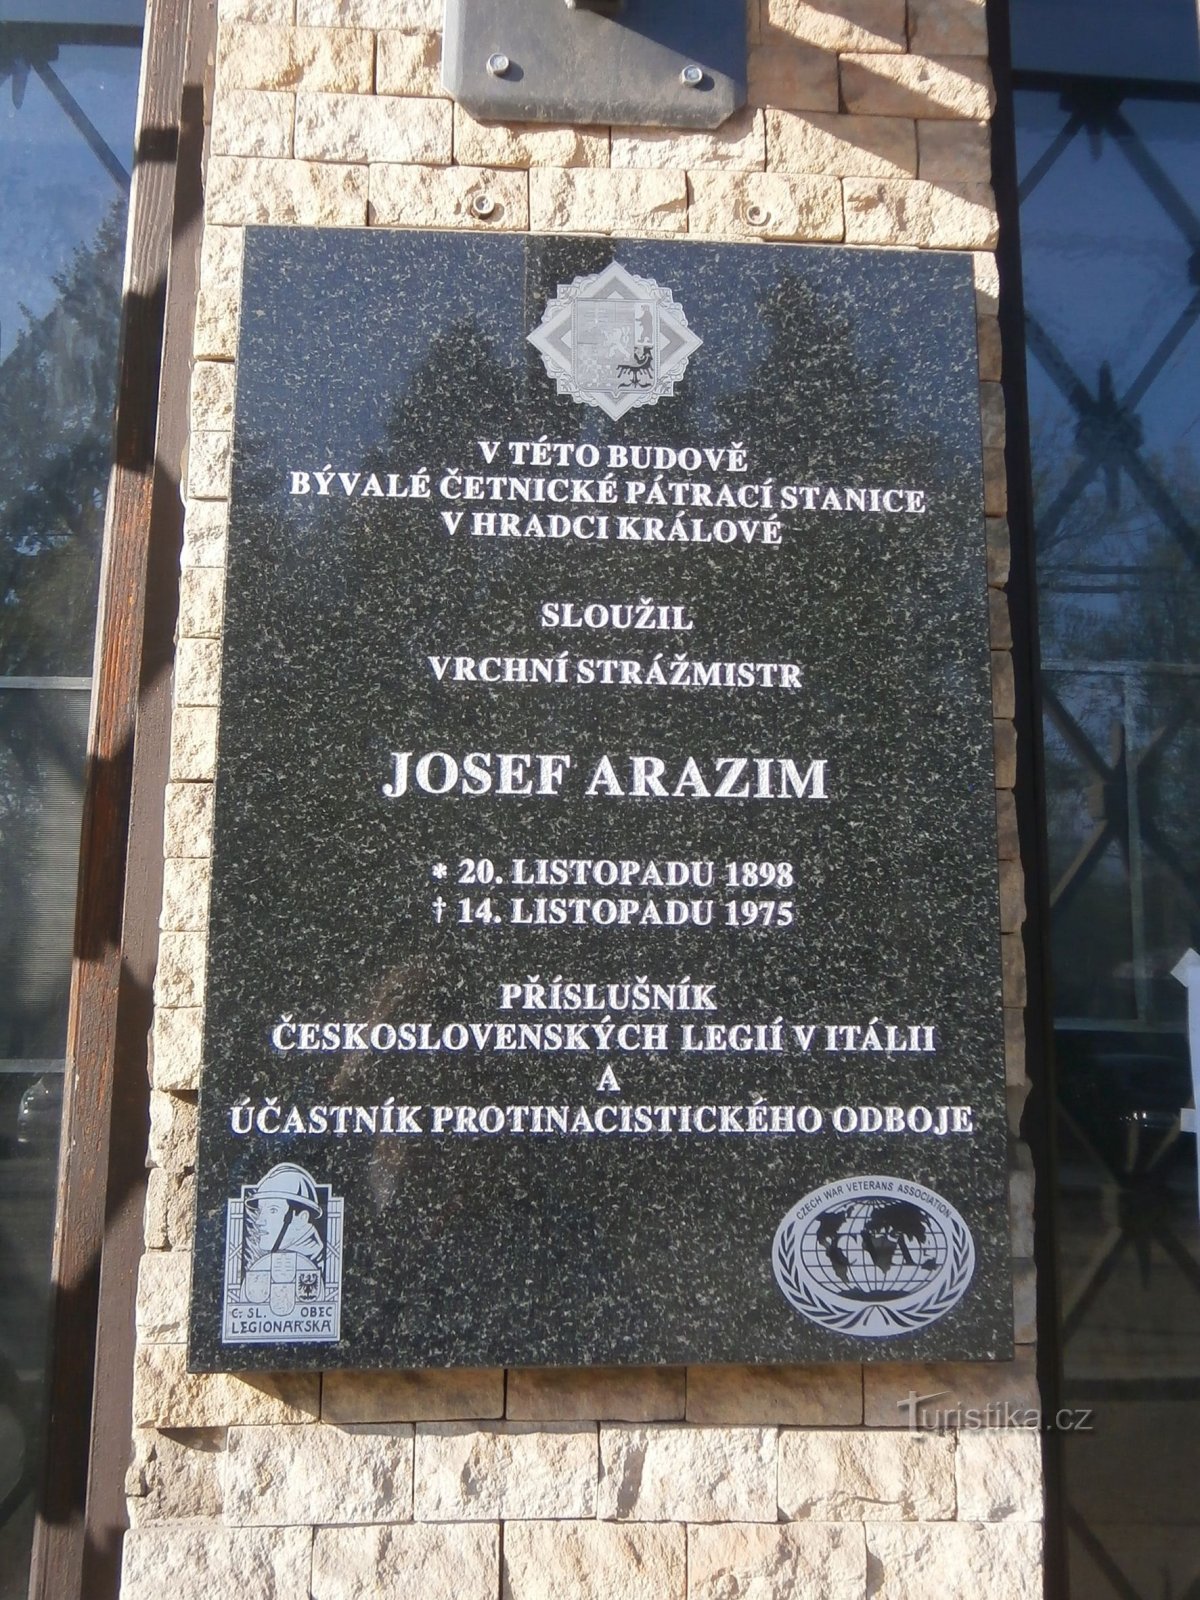 Tấm biển tưởng niệm Josef Arazím (Hradec Králové, ngày 14.4.2017 tháng XNUMX năm XNUMX)